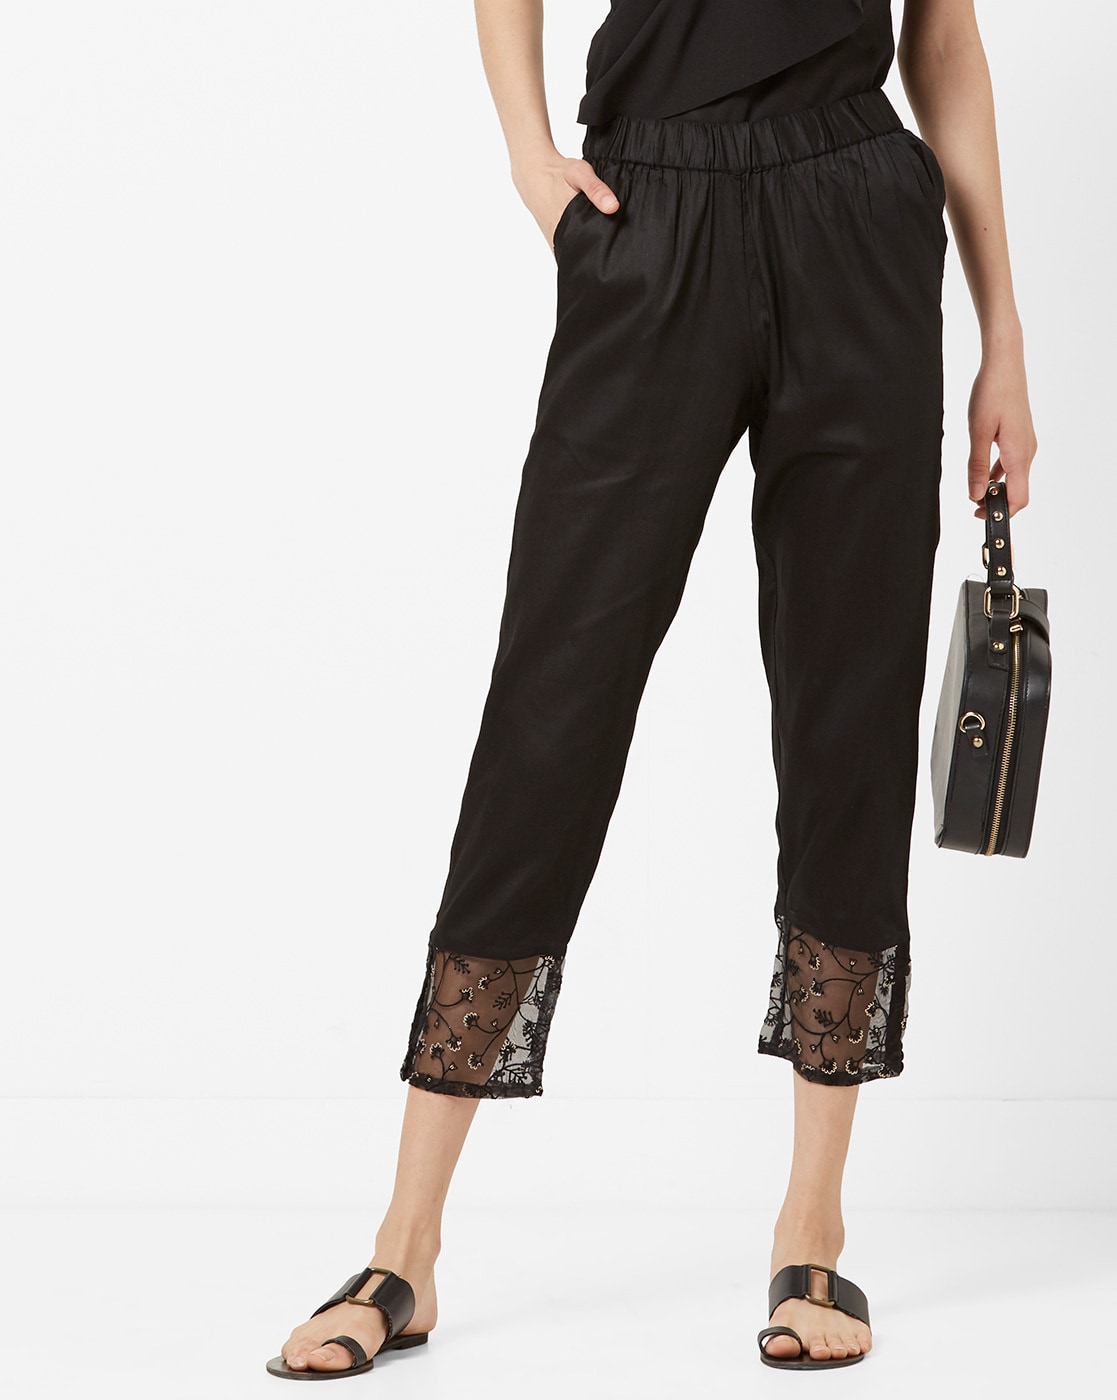 301 - Black Casual Lace Pant For Women - Cigarette pants - Straight Pant